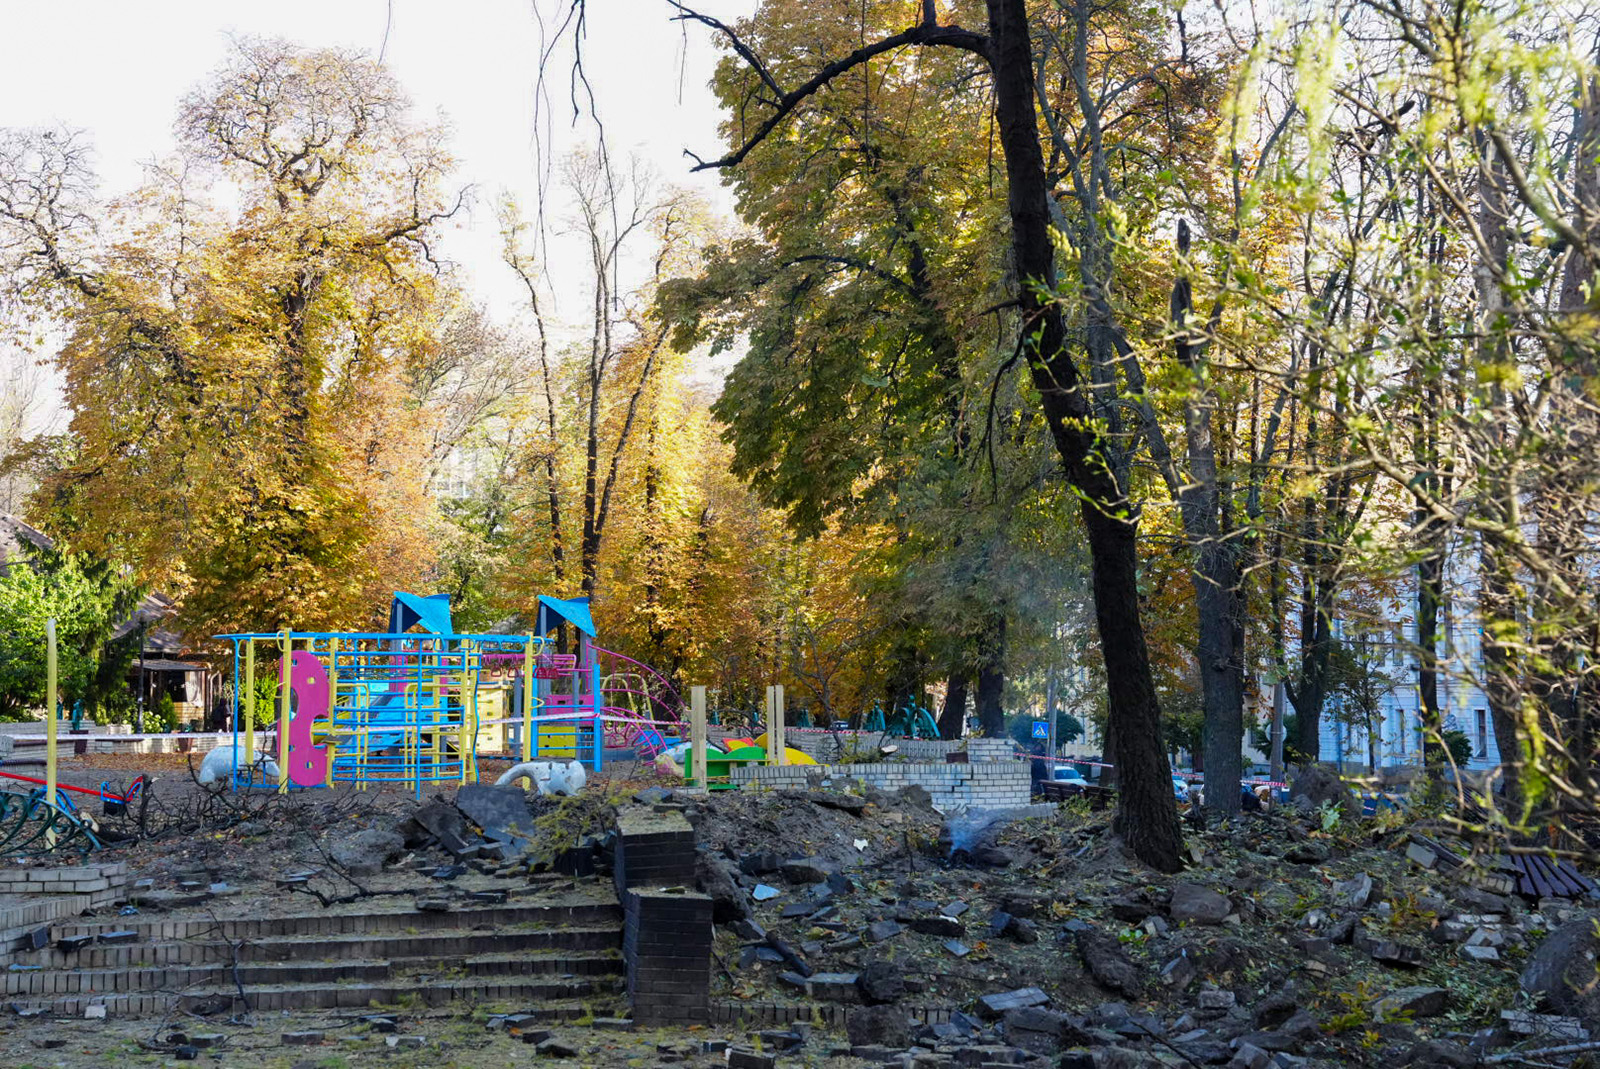 children-s-playground-hit-in-kyiv-attack-ukrainian-official-says